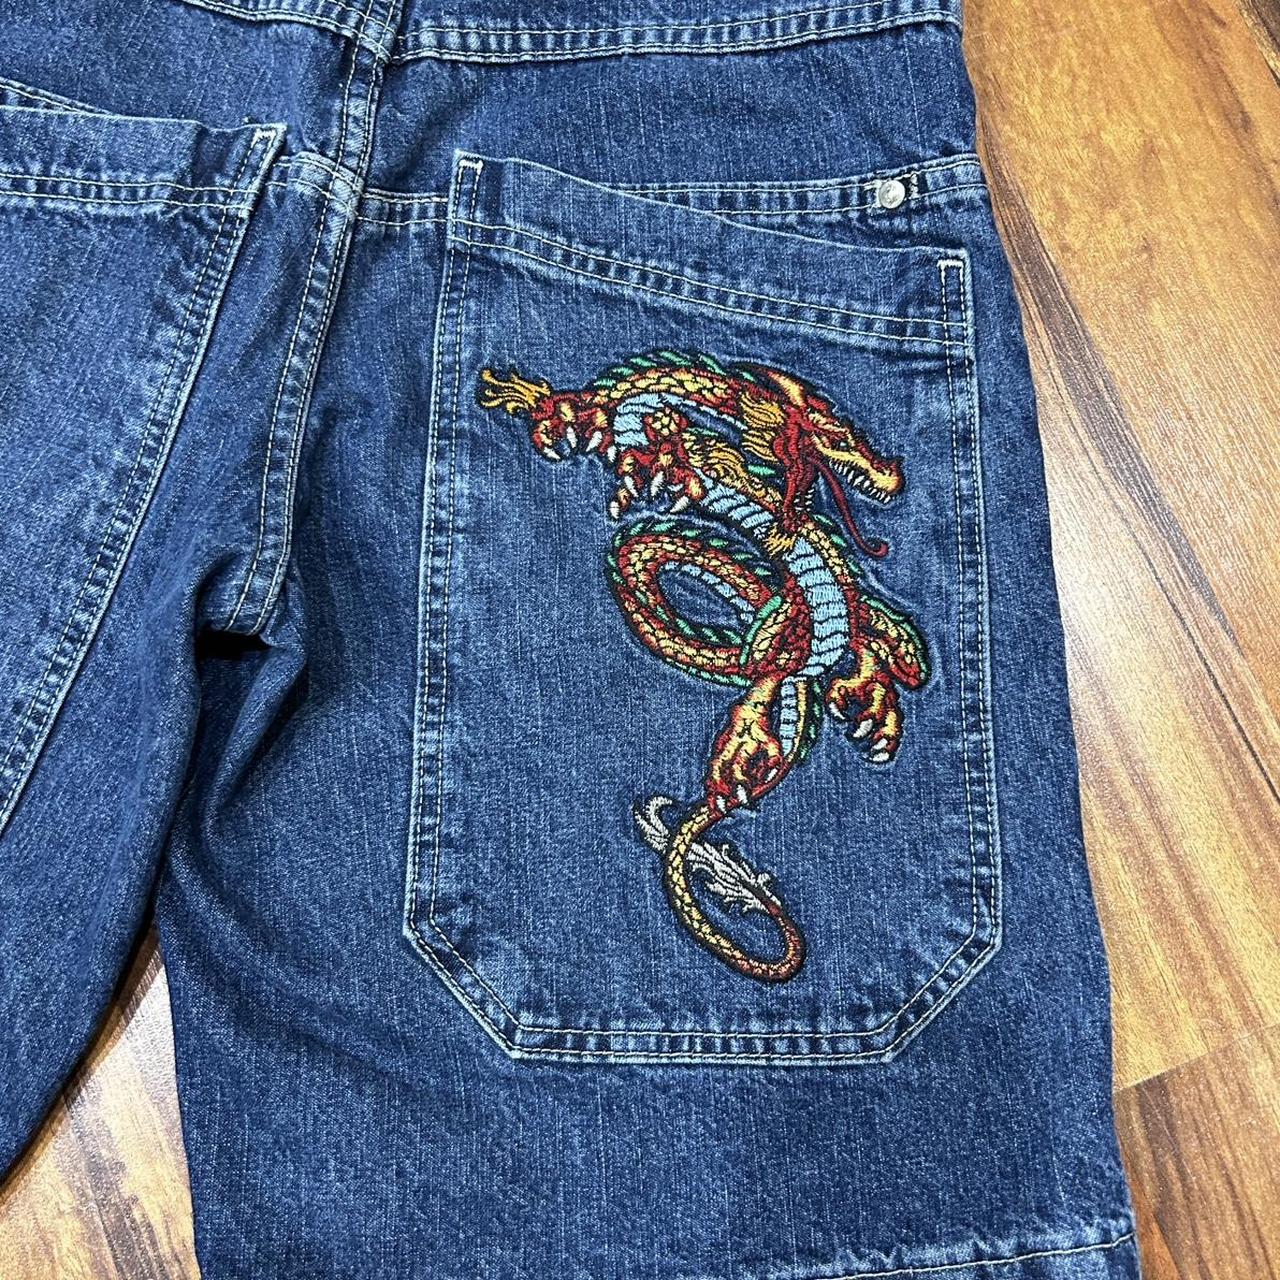 JNCO Jeans Rare Dragon tribal embroidered Jorts Ed... - Depop